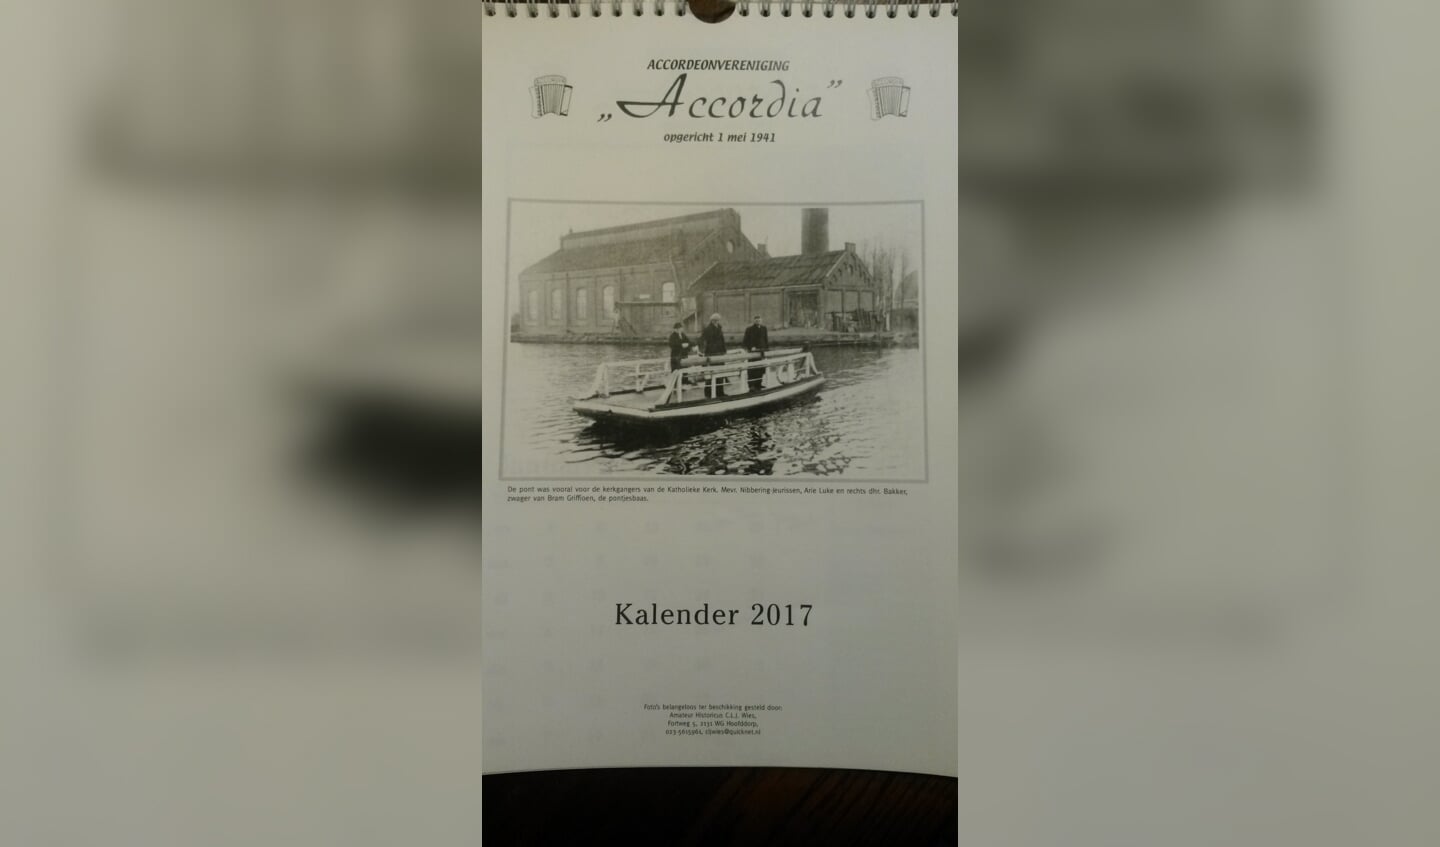 Accordia Kalender 2017